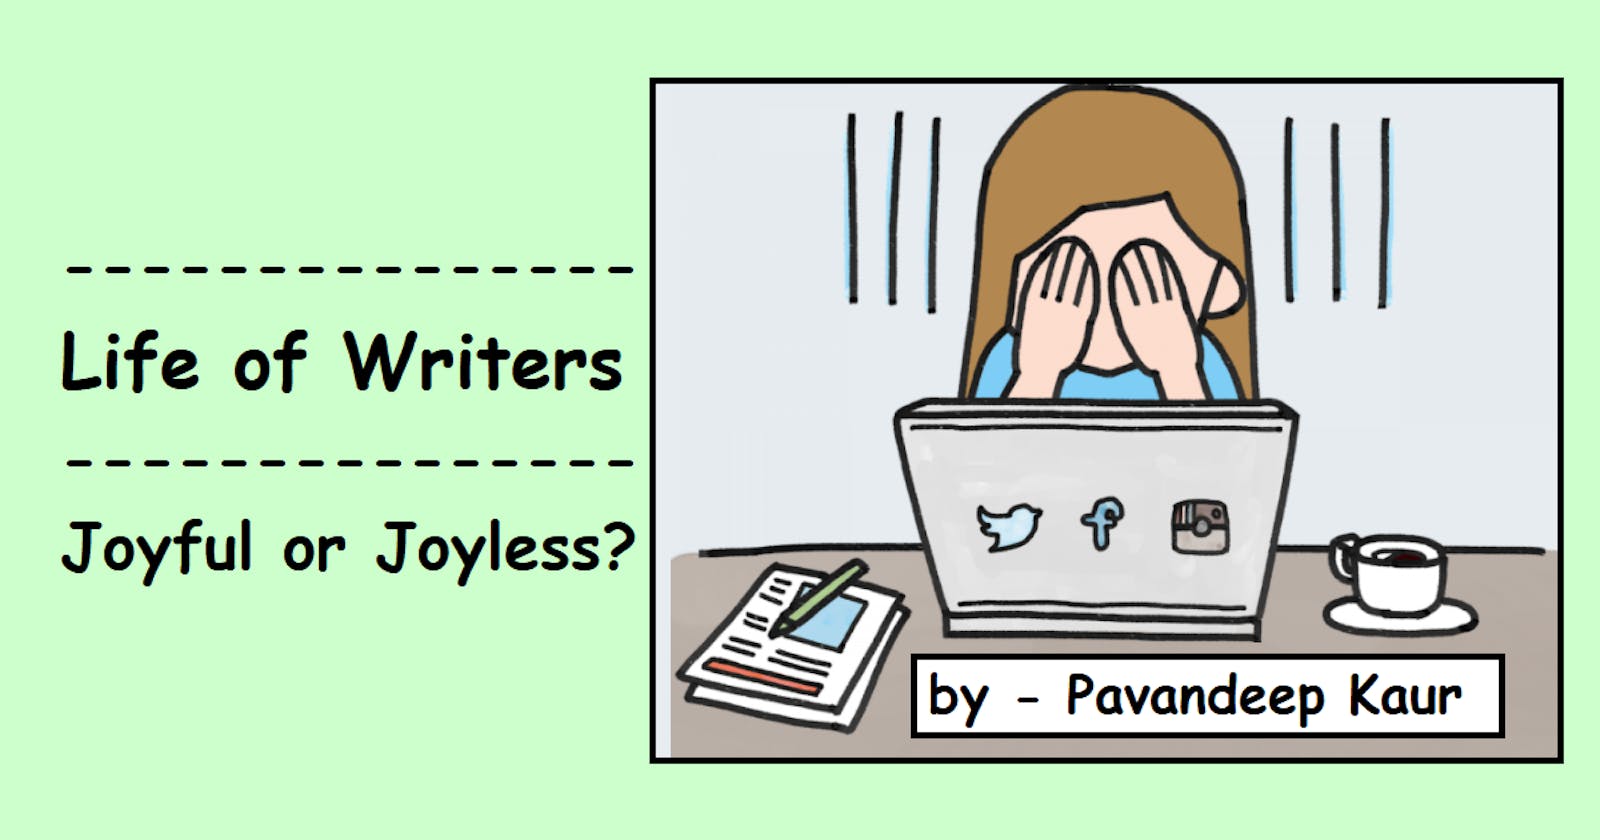 Life of writers - Joyful or Joyless?